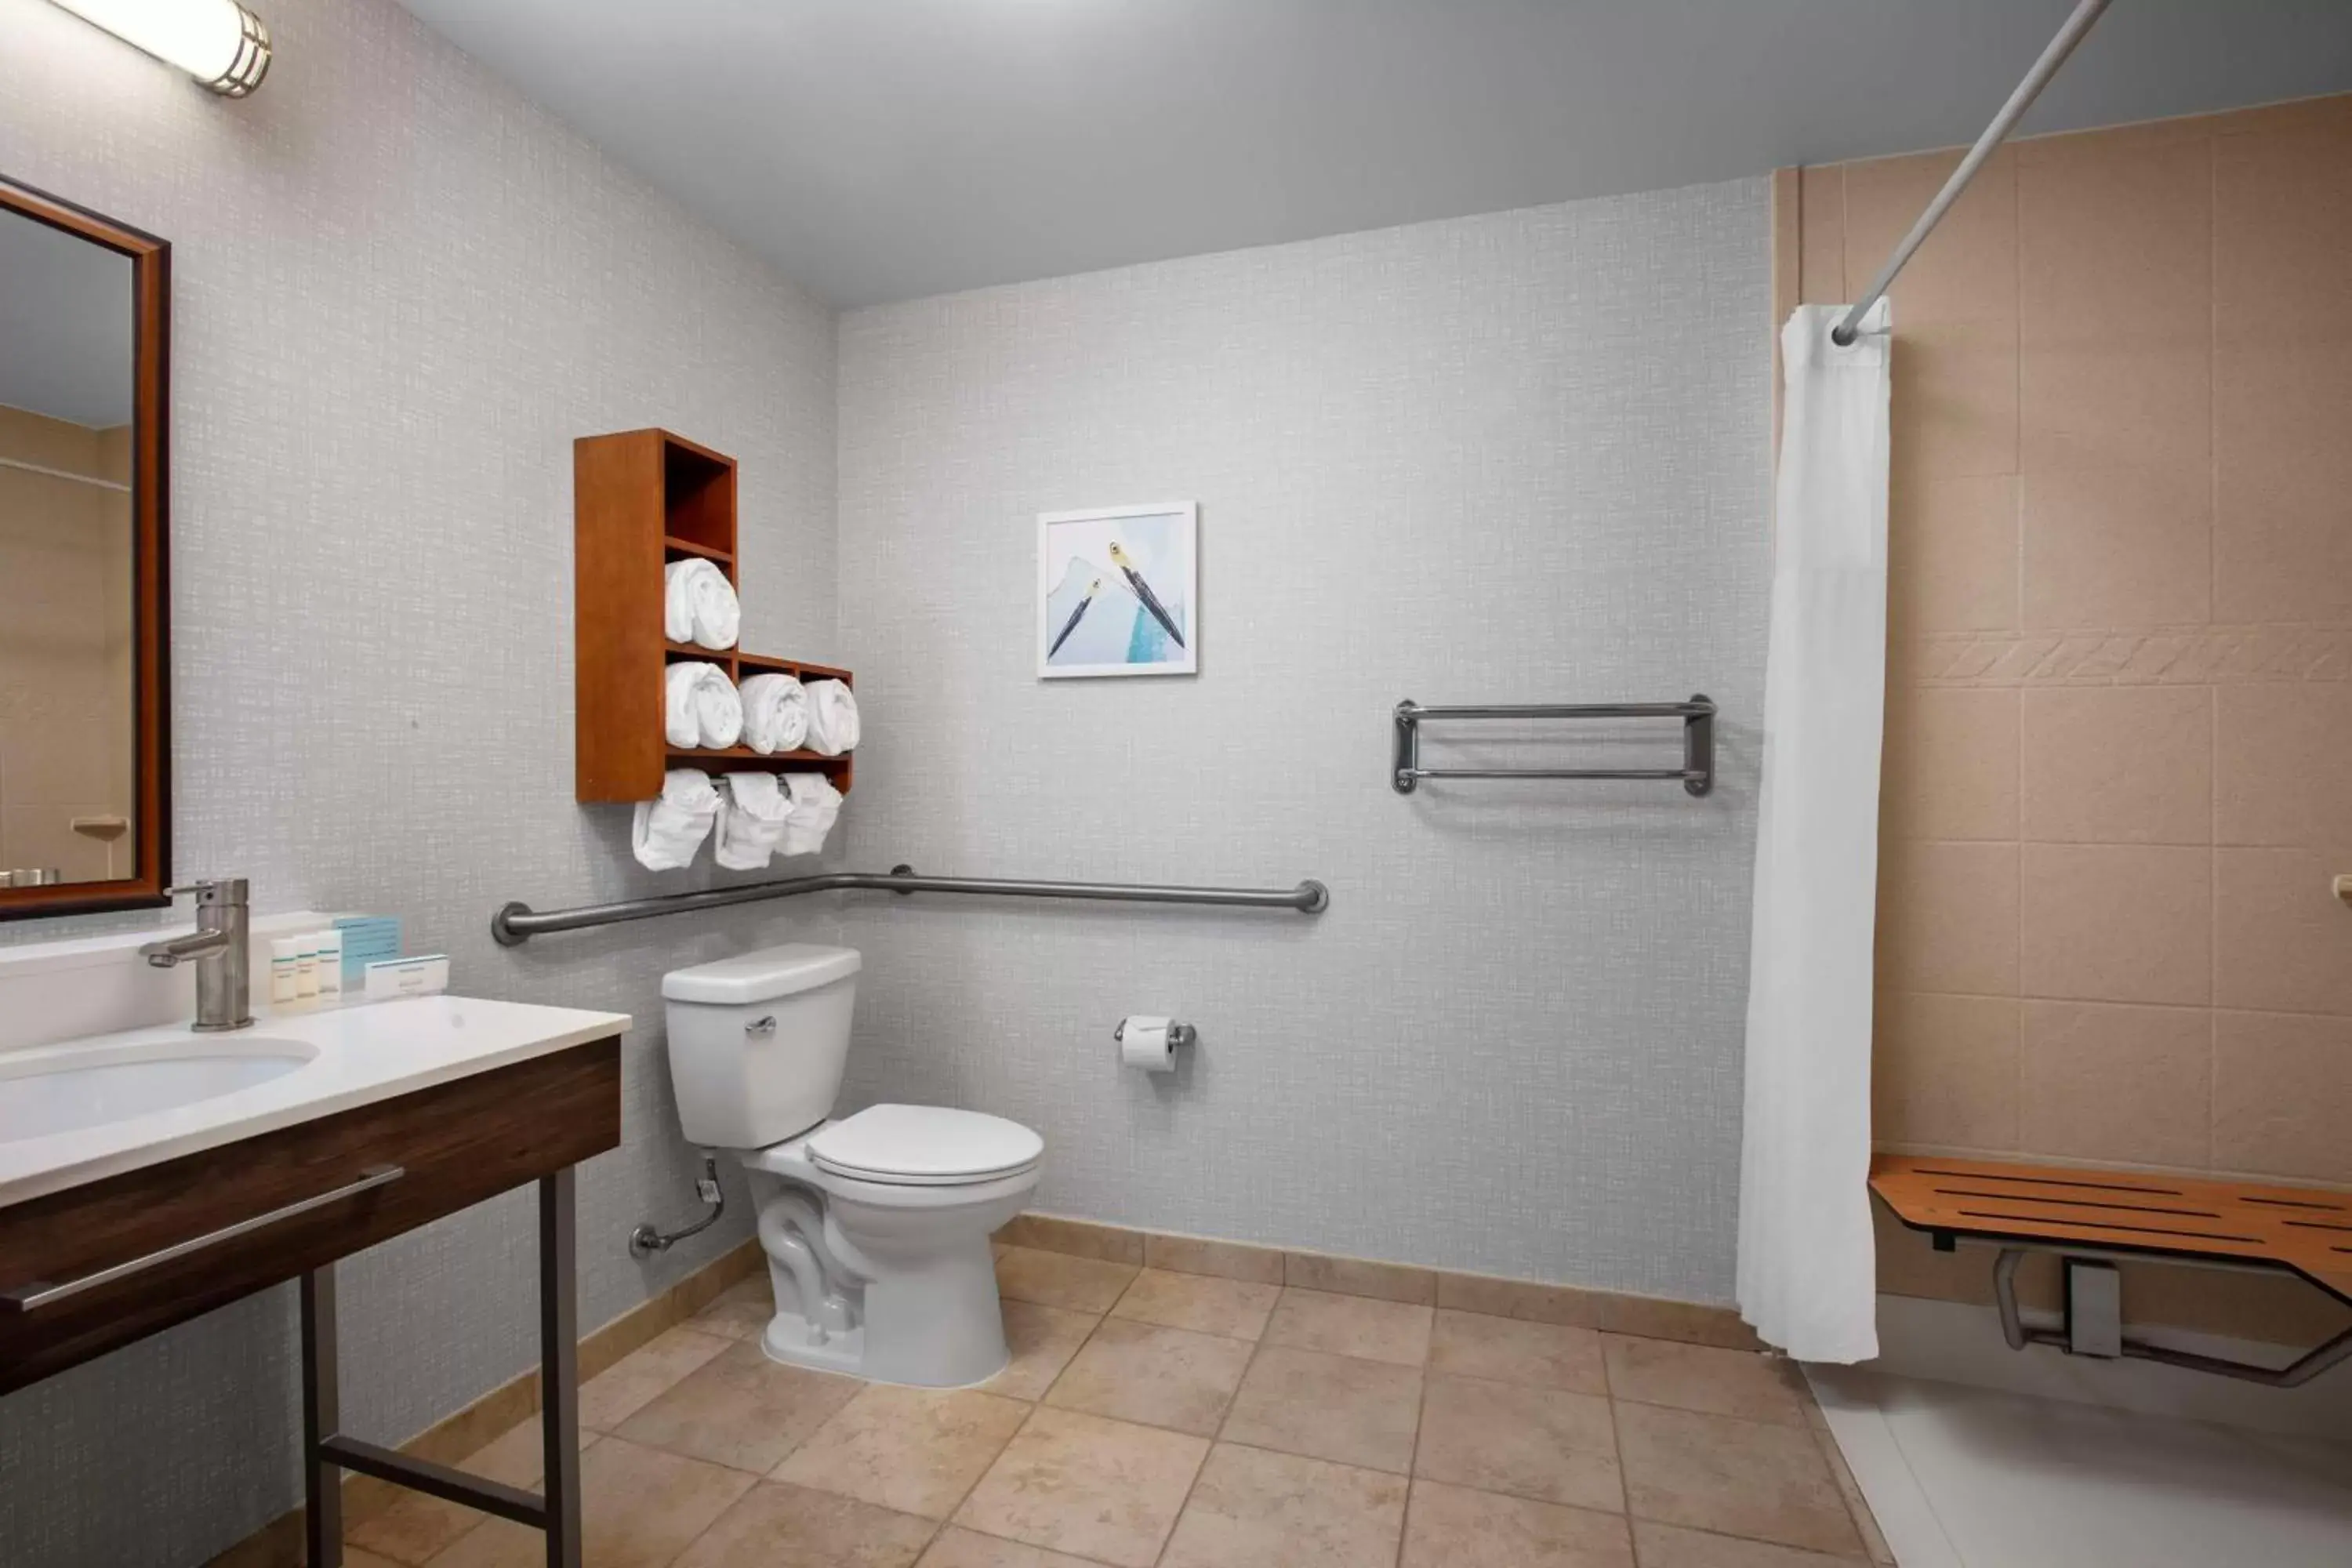 Bathroom in Hampton Inn & Suites Homestead Miami South